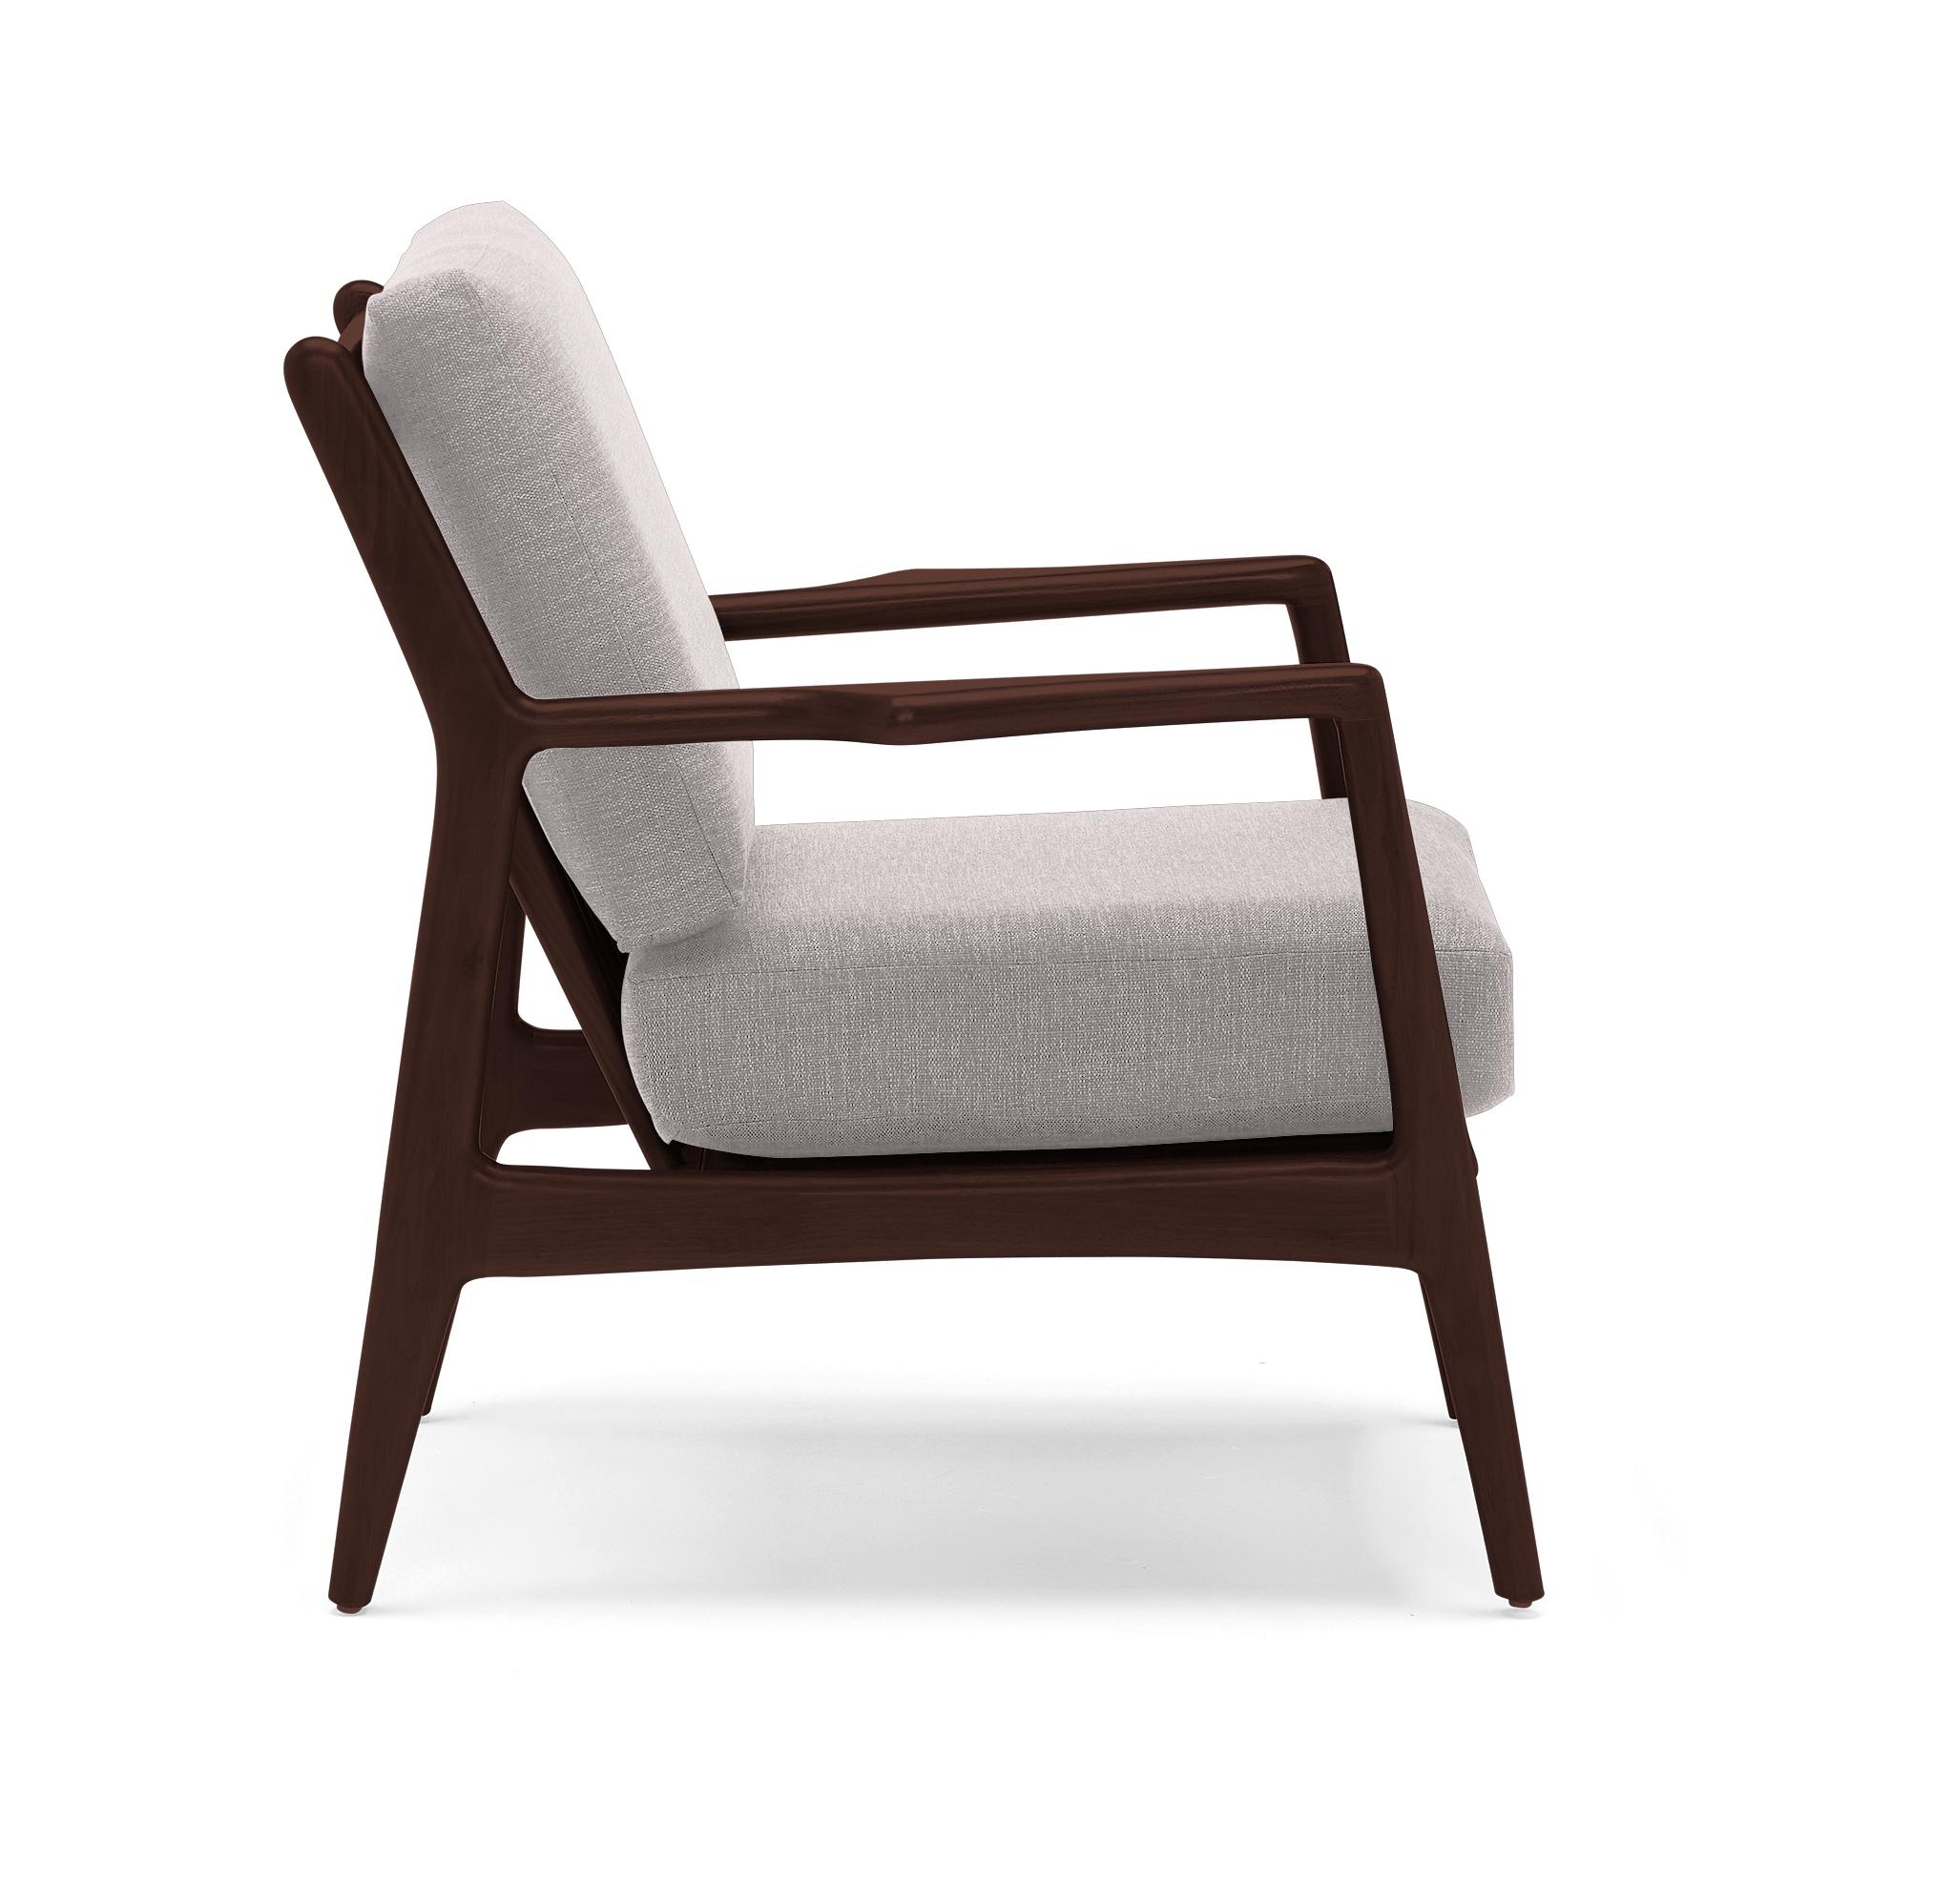 Collins Mid Century Modern Chair - Sunbrella Premier Wisteria - Walnut - Image 2